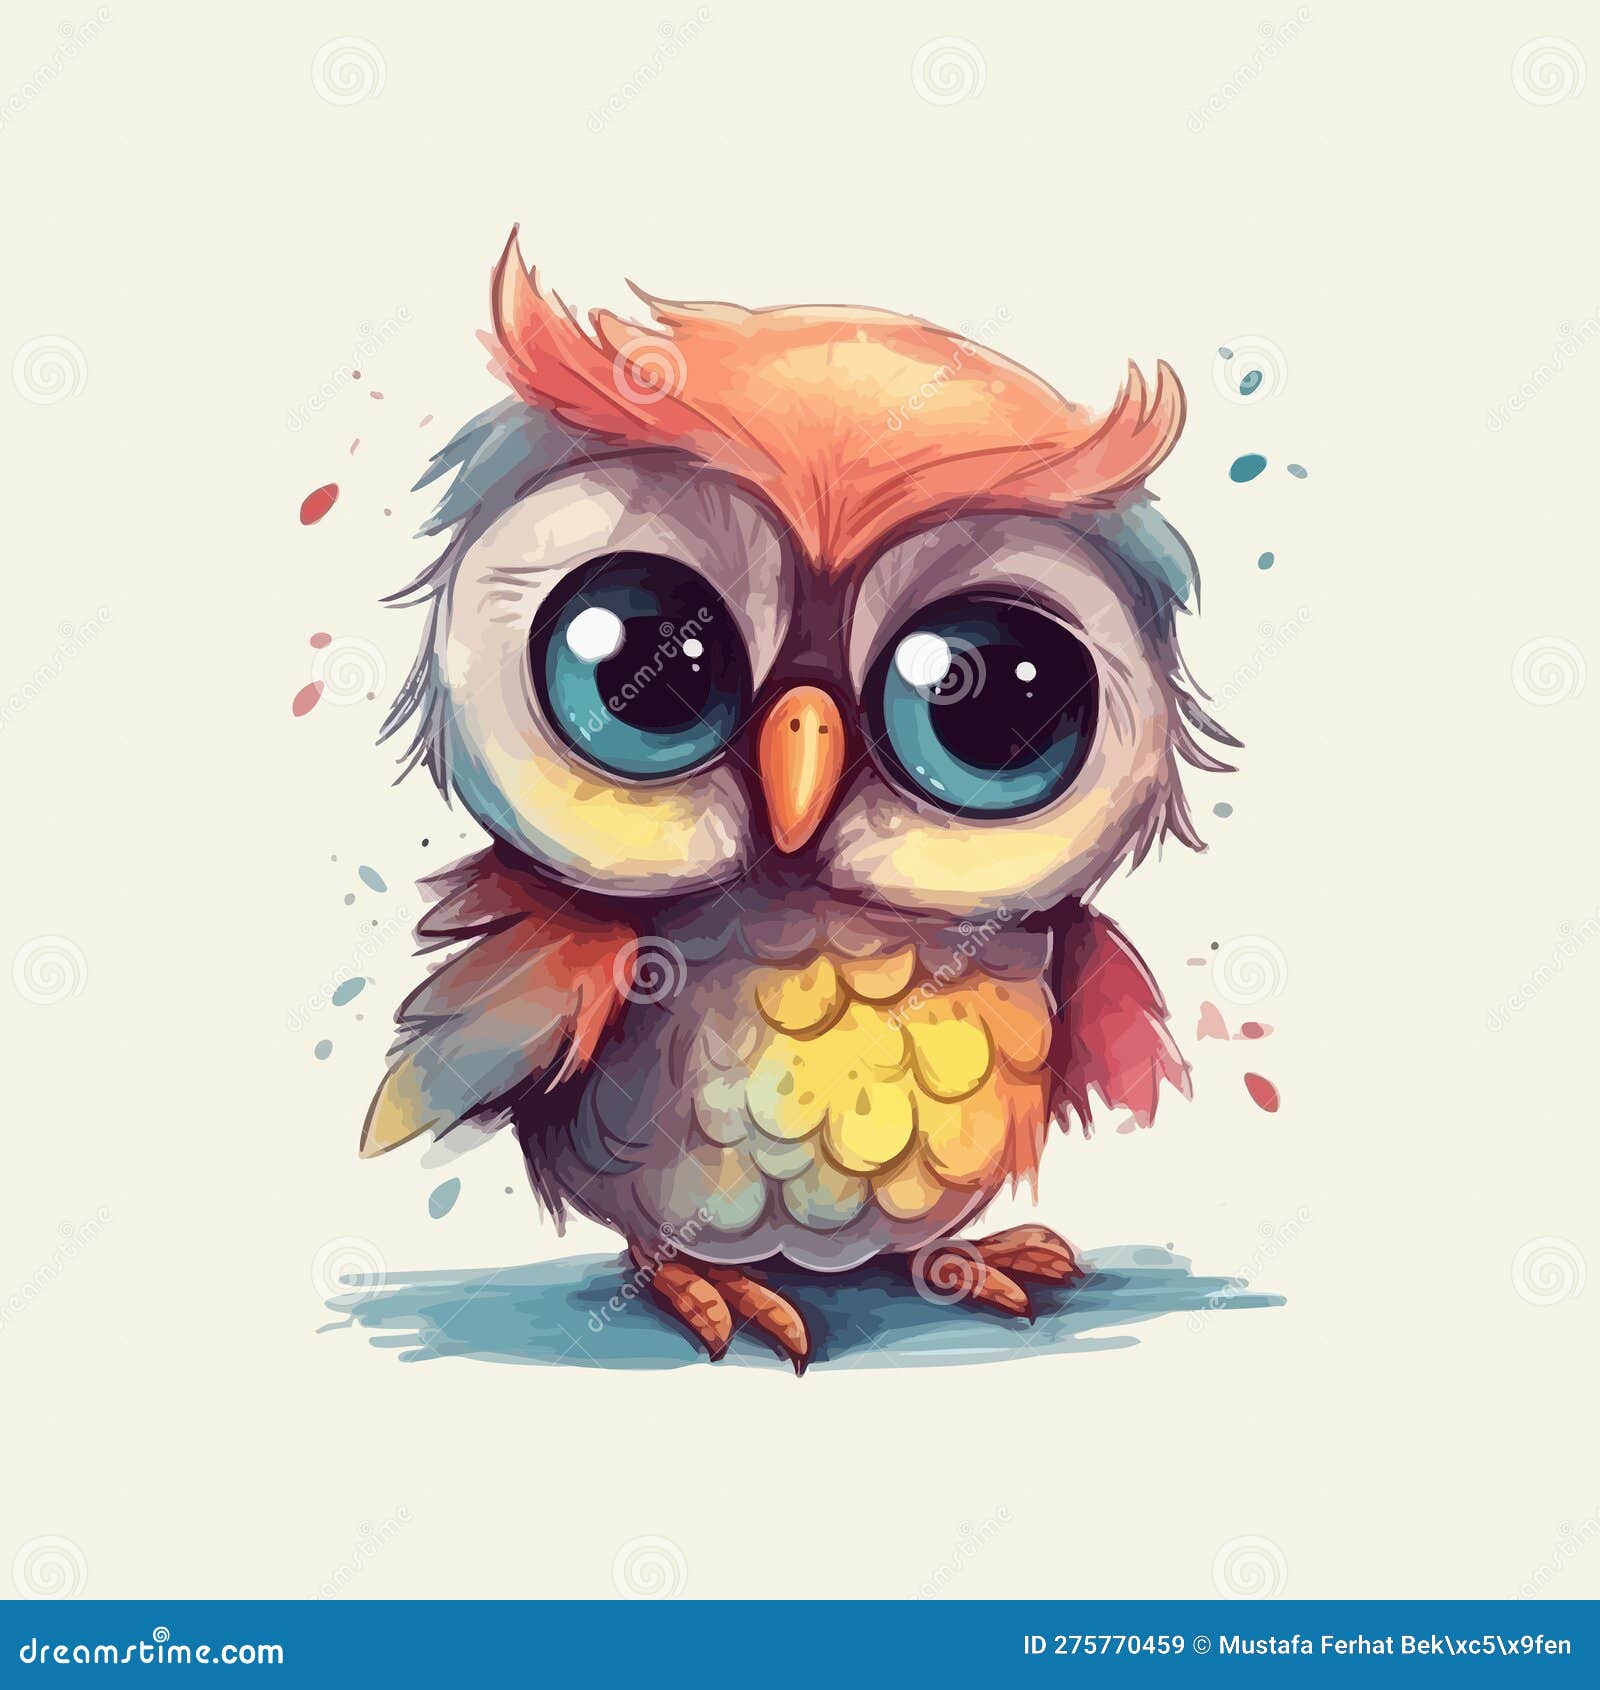 Cute Cartoon Kawaii Baby Owl Watercolor Illustration Stock Vector ...